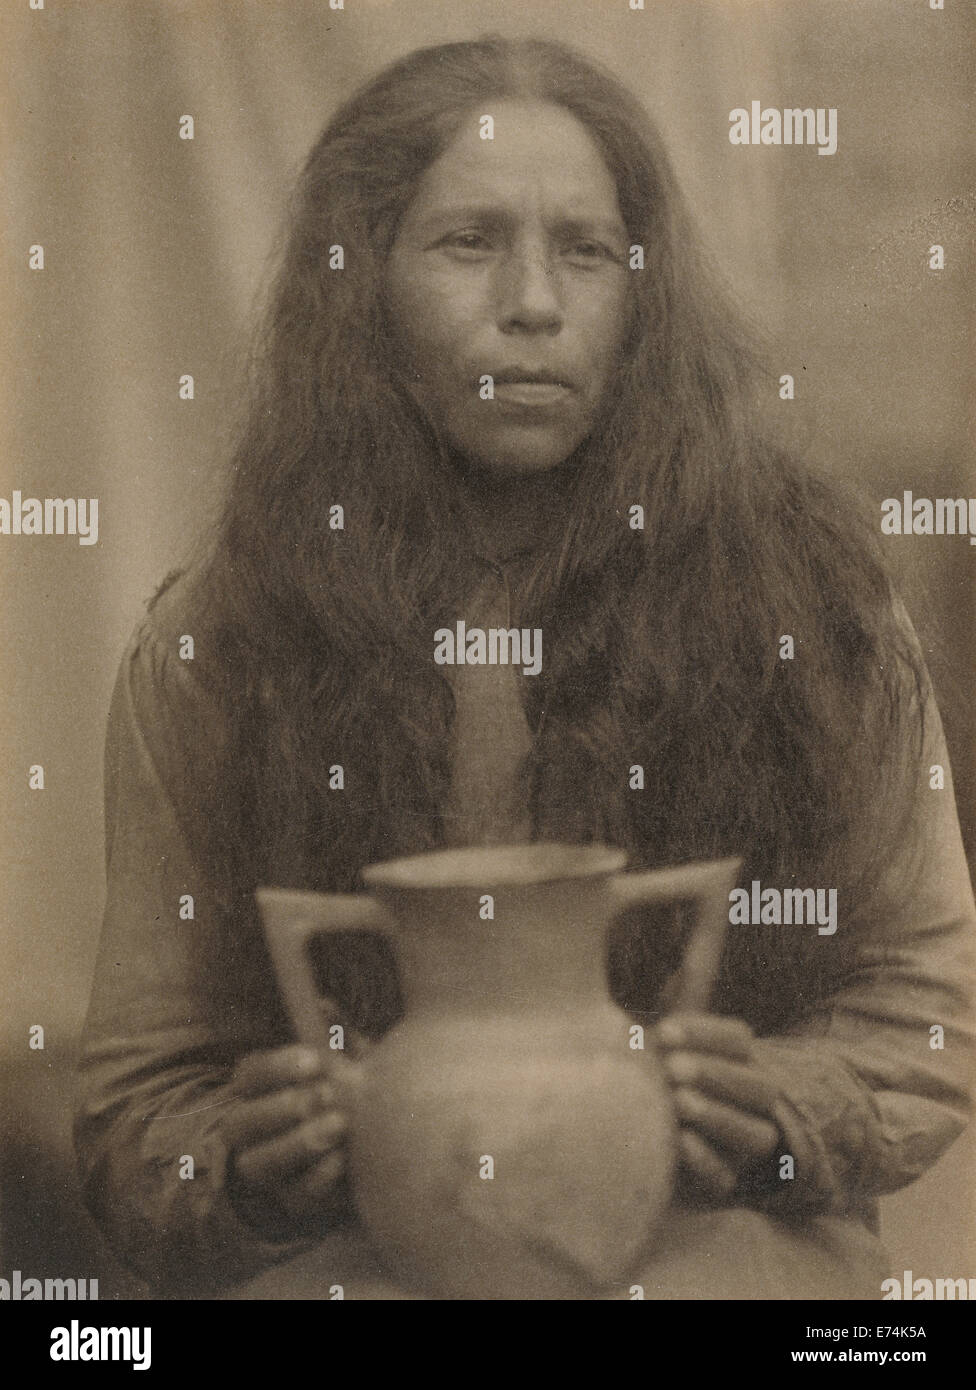 Cherokee Woman, North Carolina; Attributed to Doris Ulmann, American, 1882 - 1934; about 1929; Platinum print Stock Photo